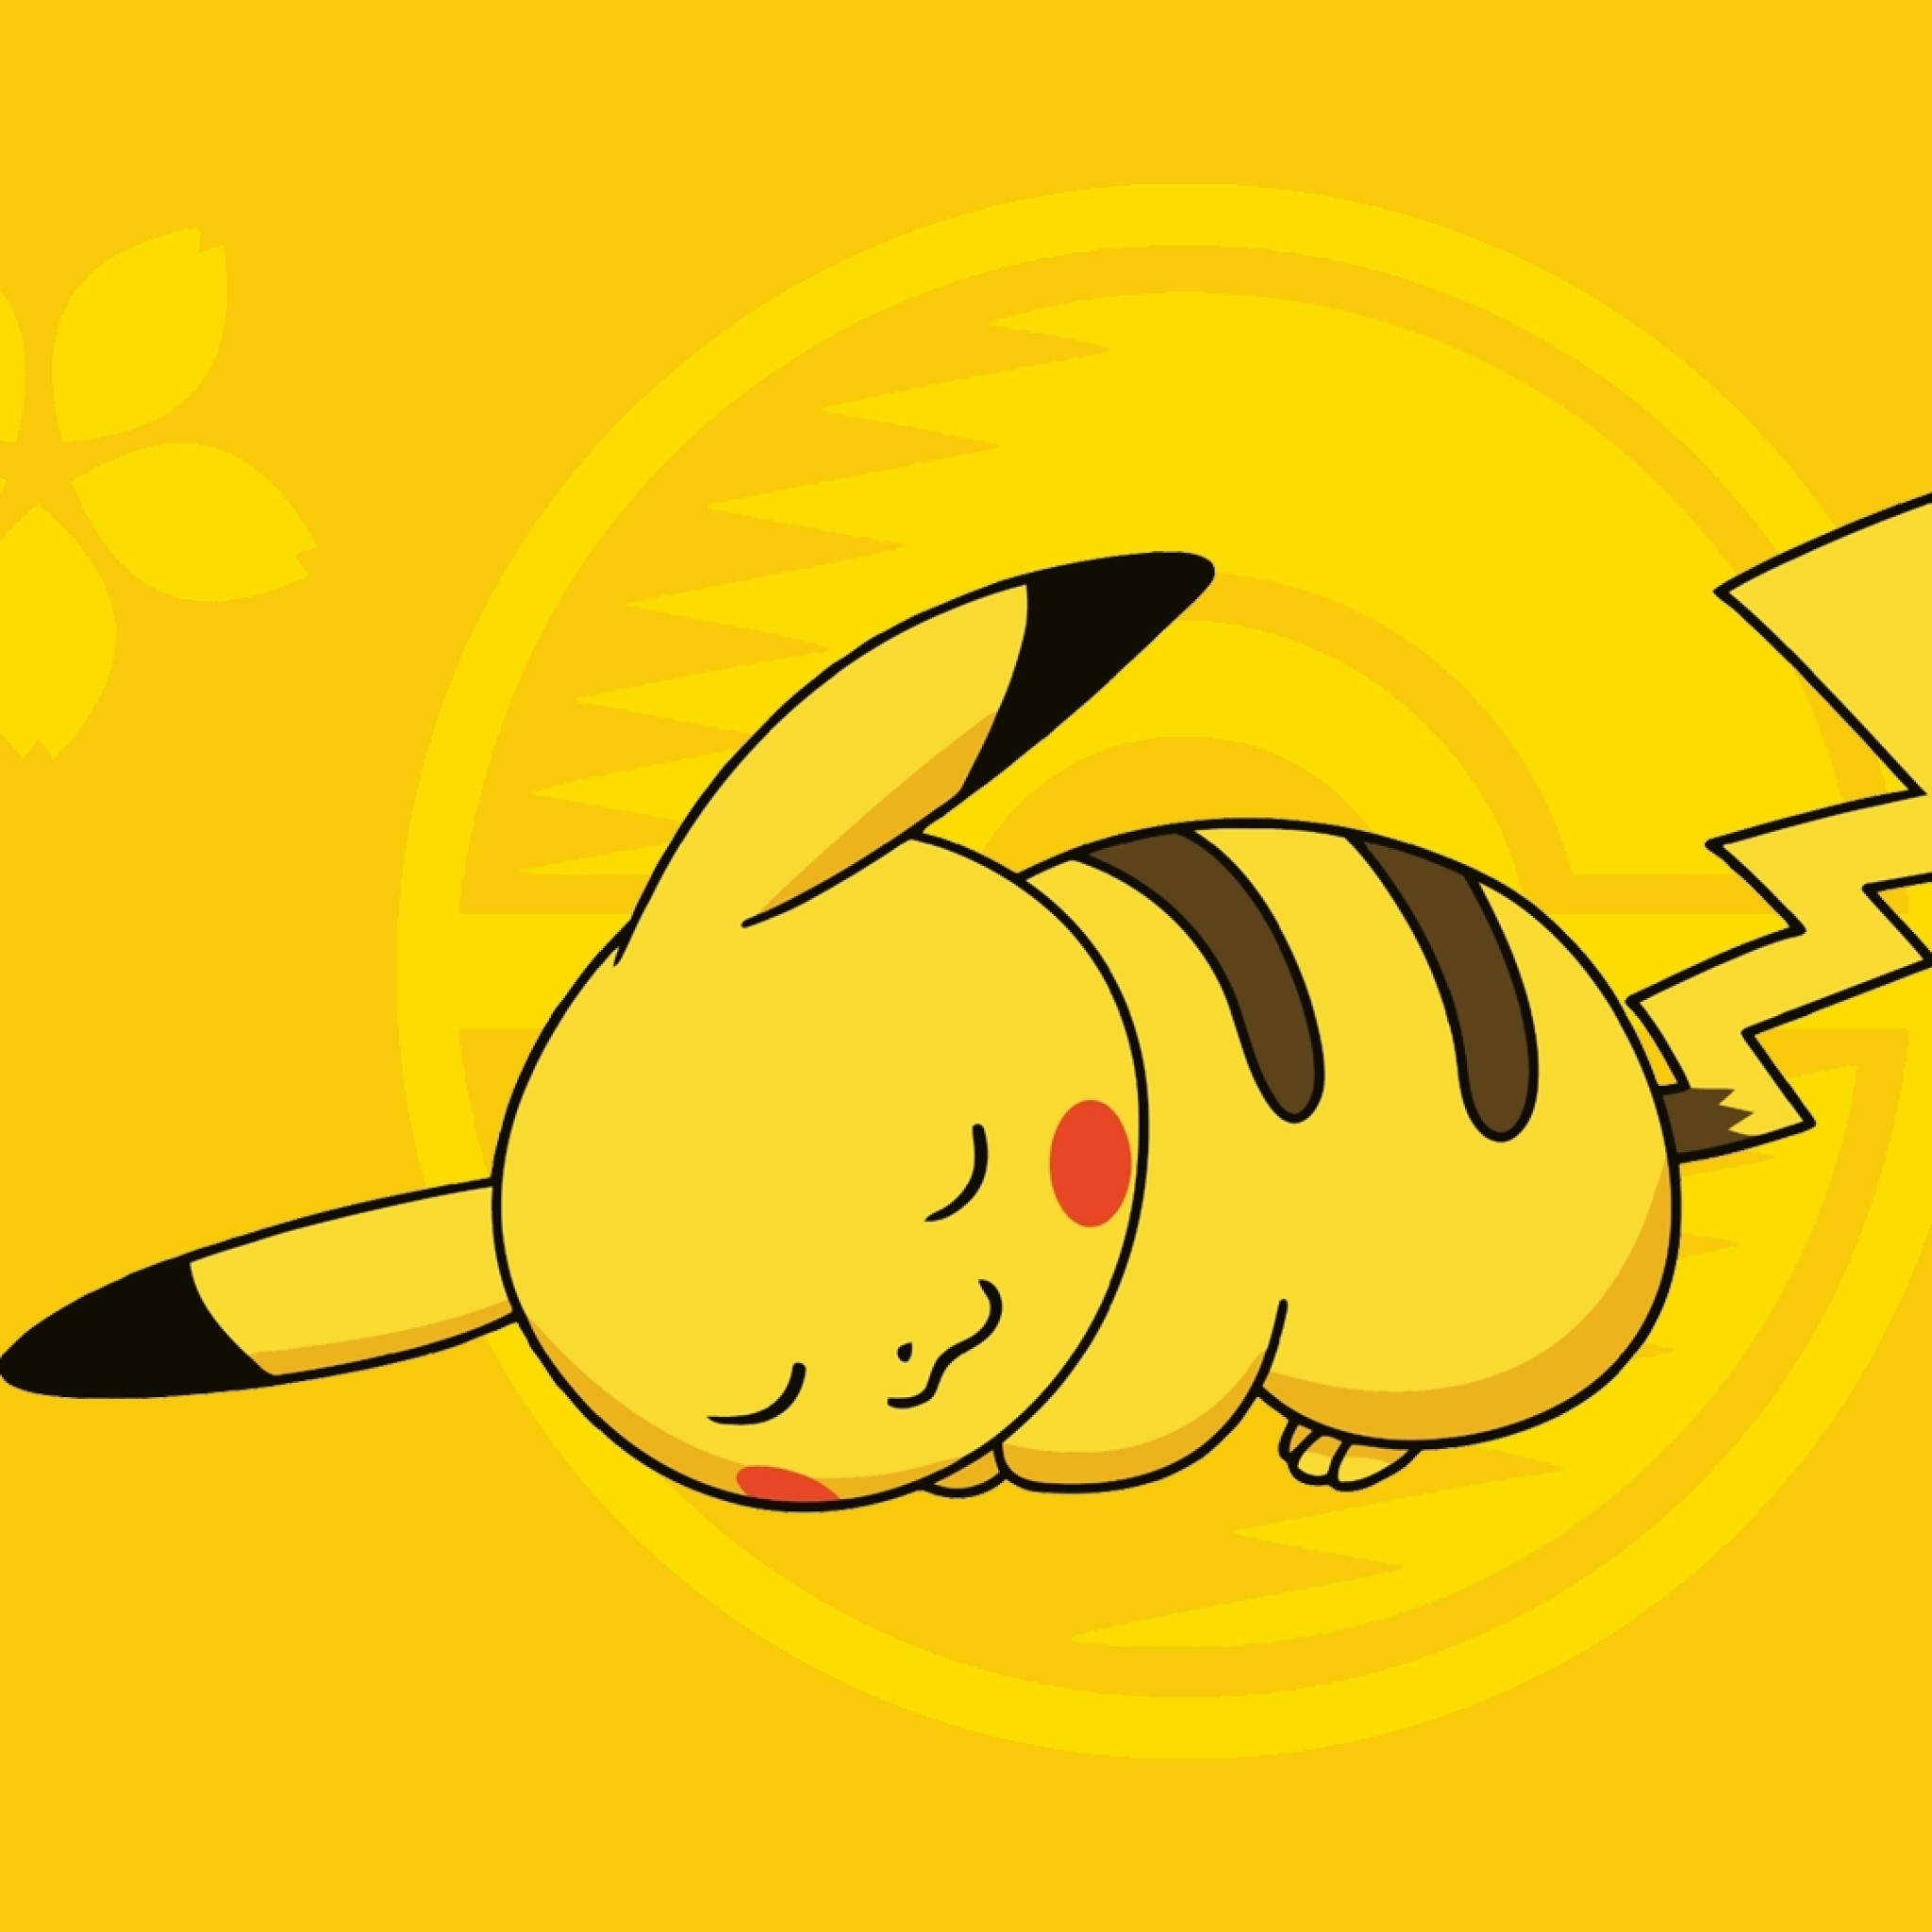 2048x2048 Sleepy Pikachu - Tap to see more cool pokemon wallpaper! - @mobile9